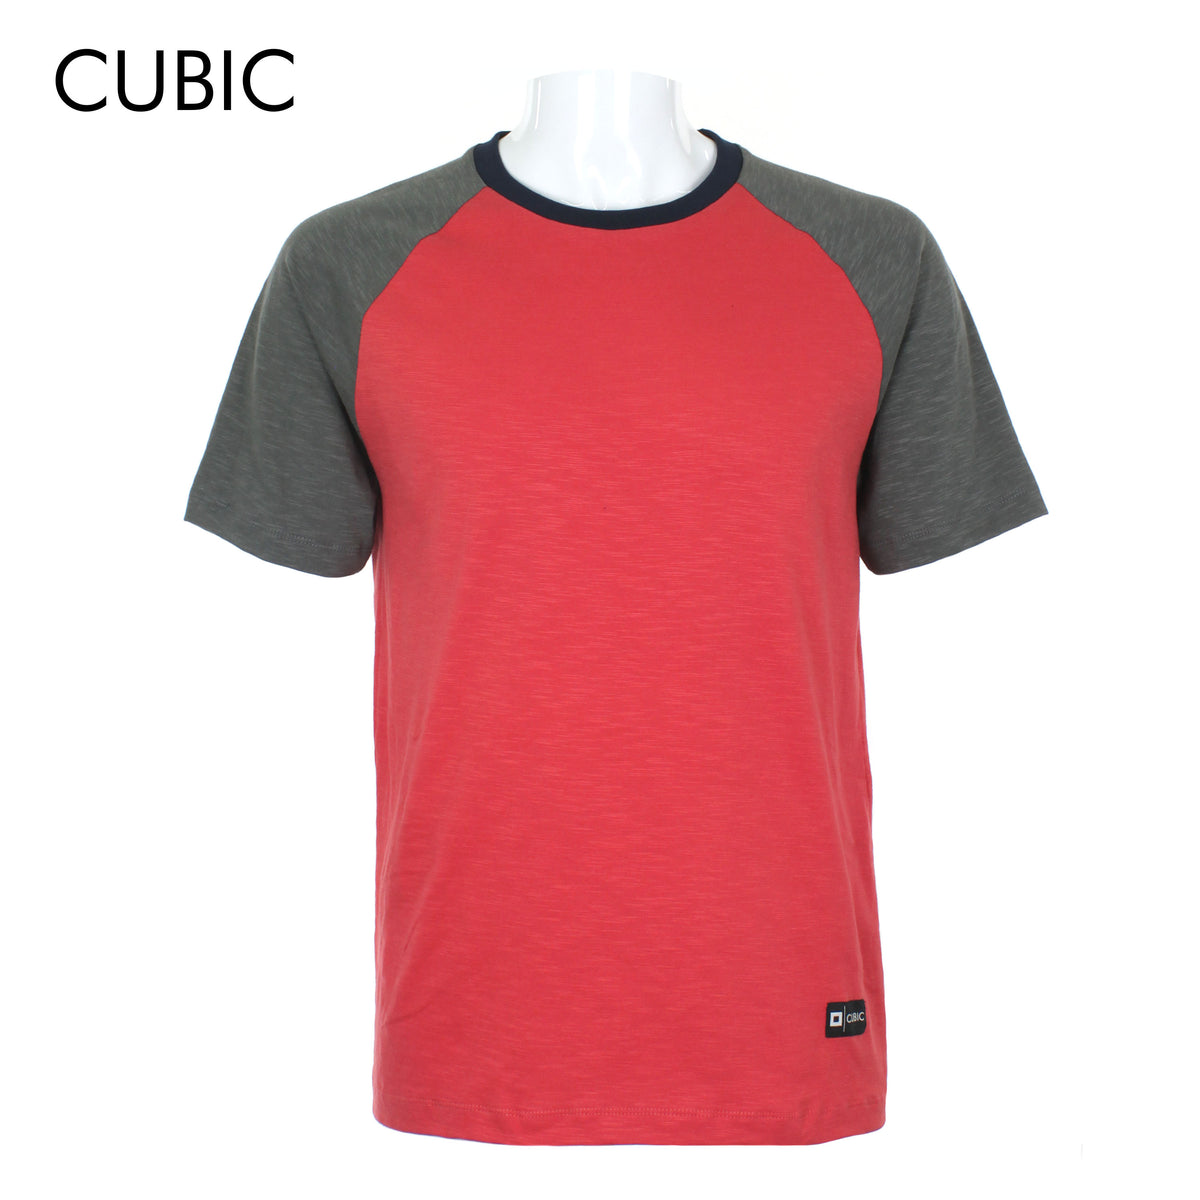 Cubic Men Round Neck Tees T-shirt Jersey Shirt Top Top for Men - CMJ2337R